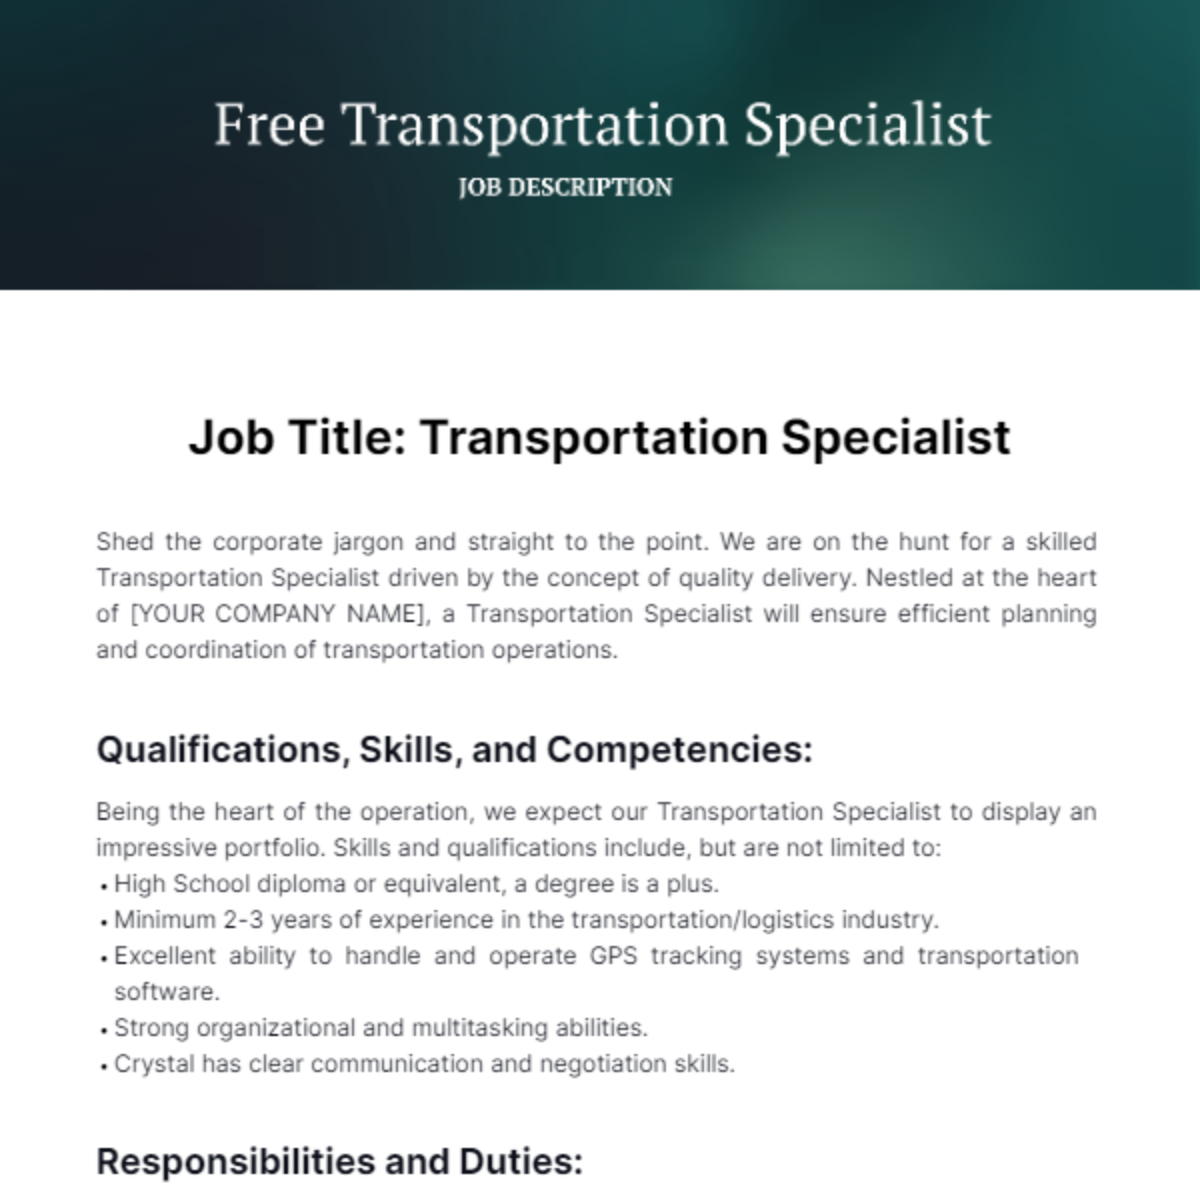 Free Transportation Specialist Job Description Template